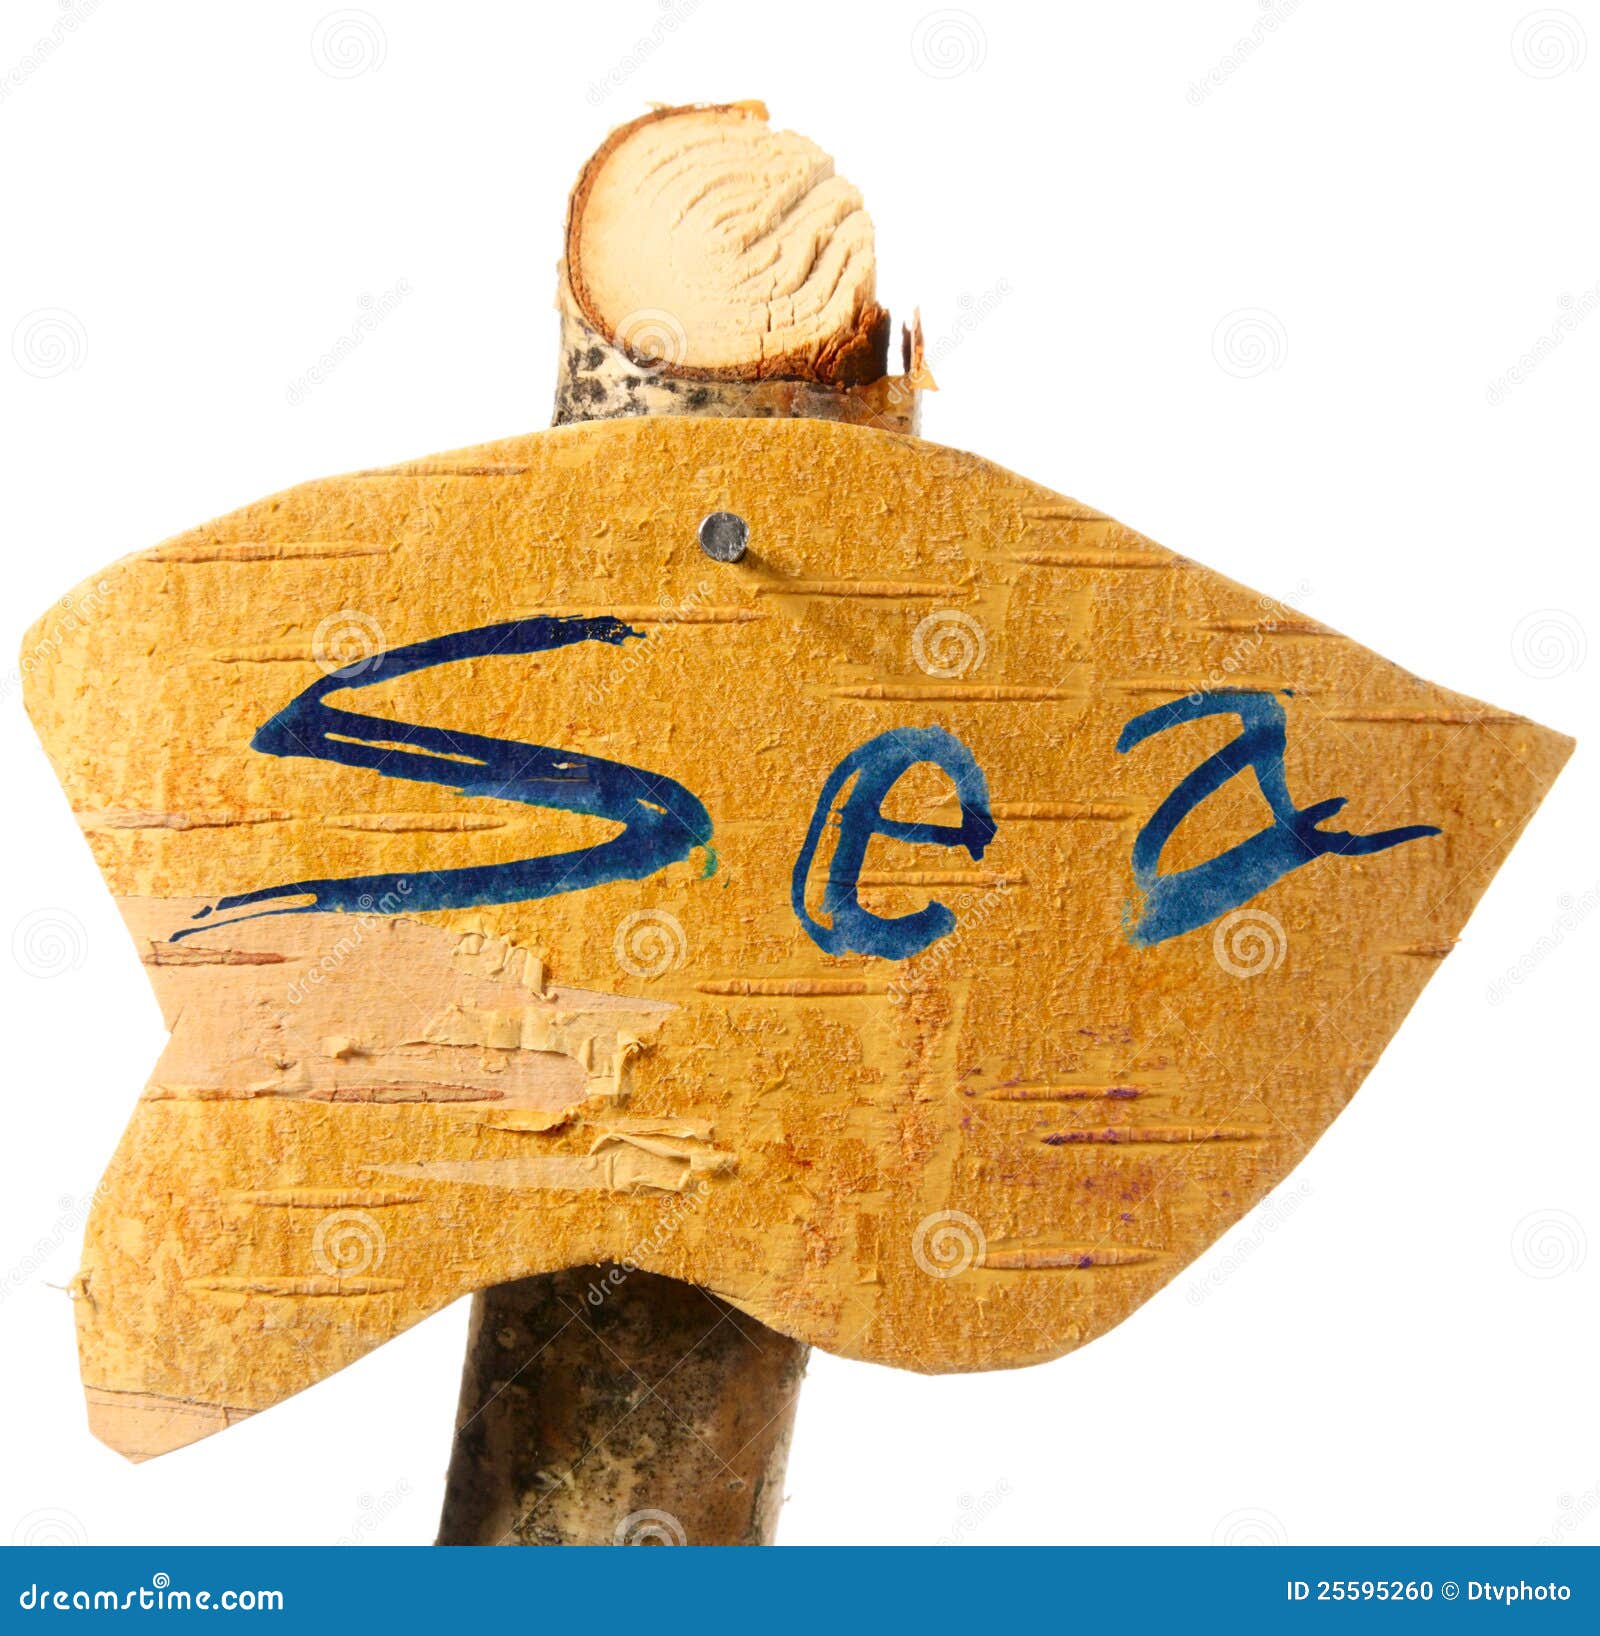 Signpost de madeira do sentido ao mar. Isolado no branco